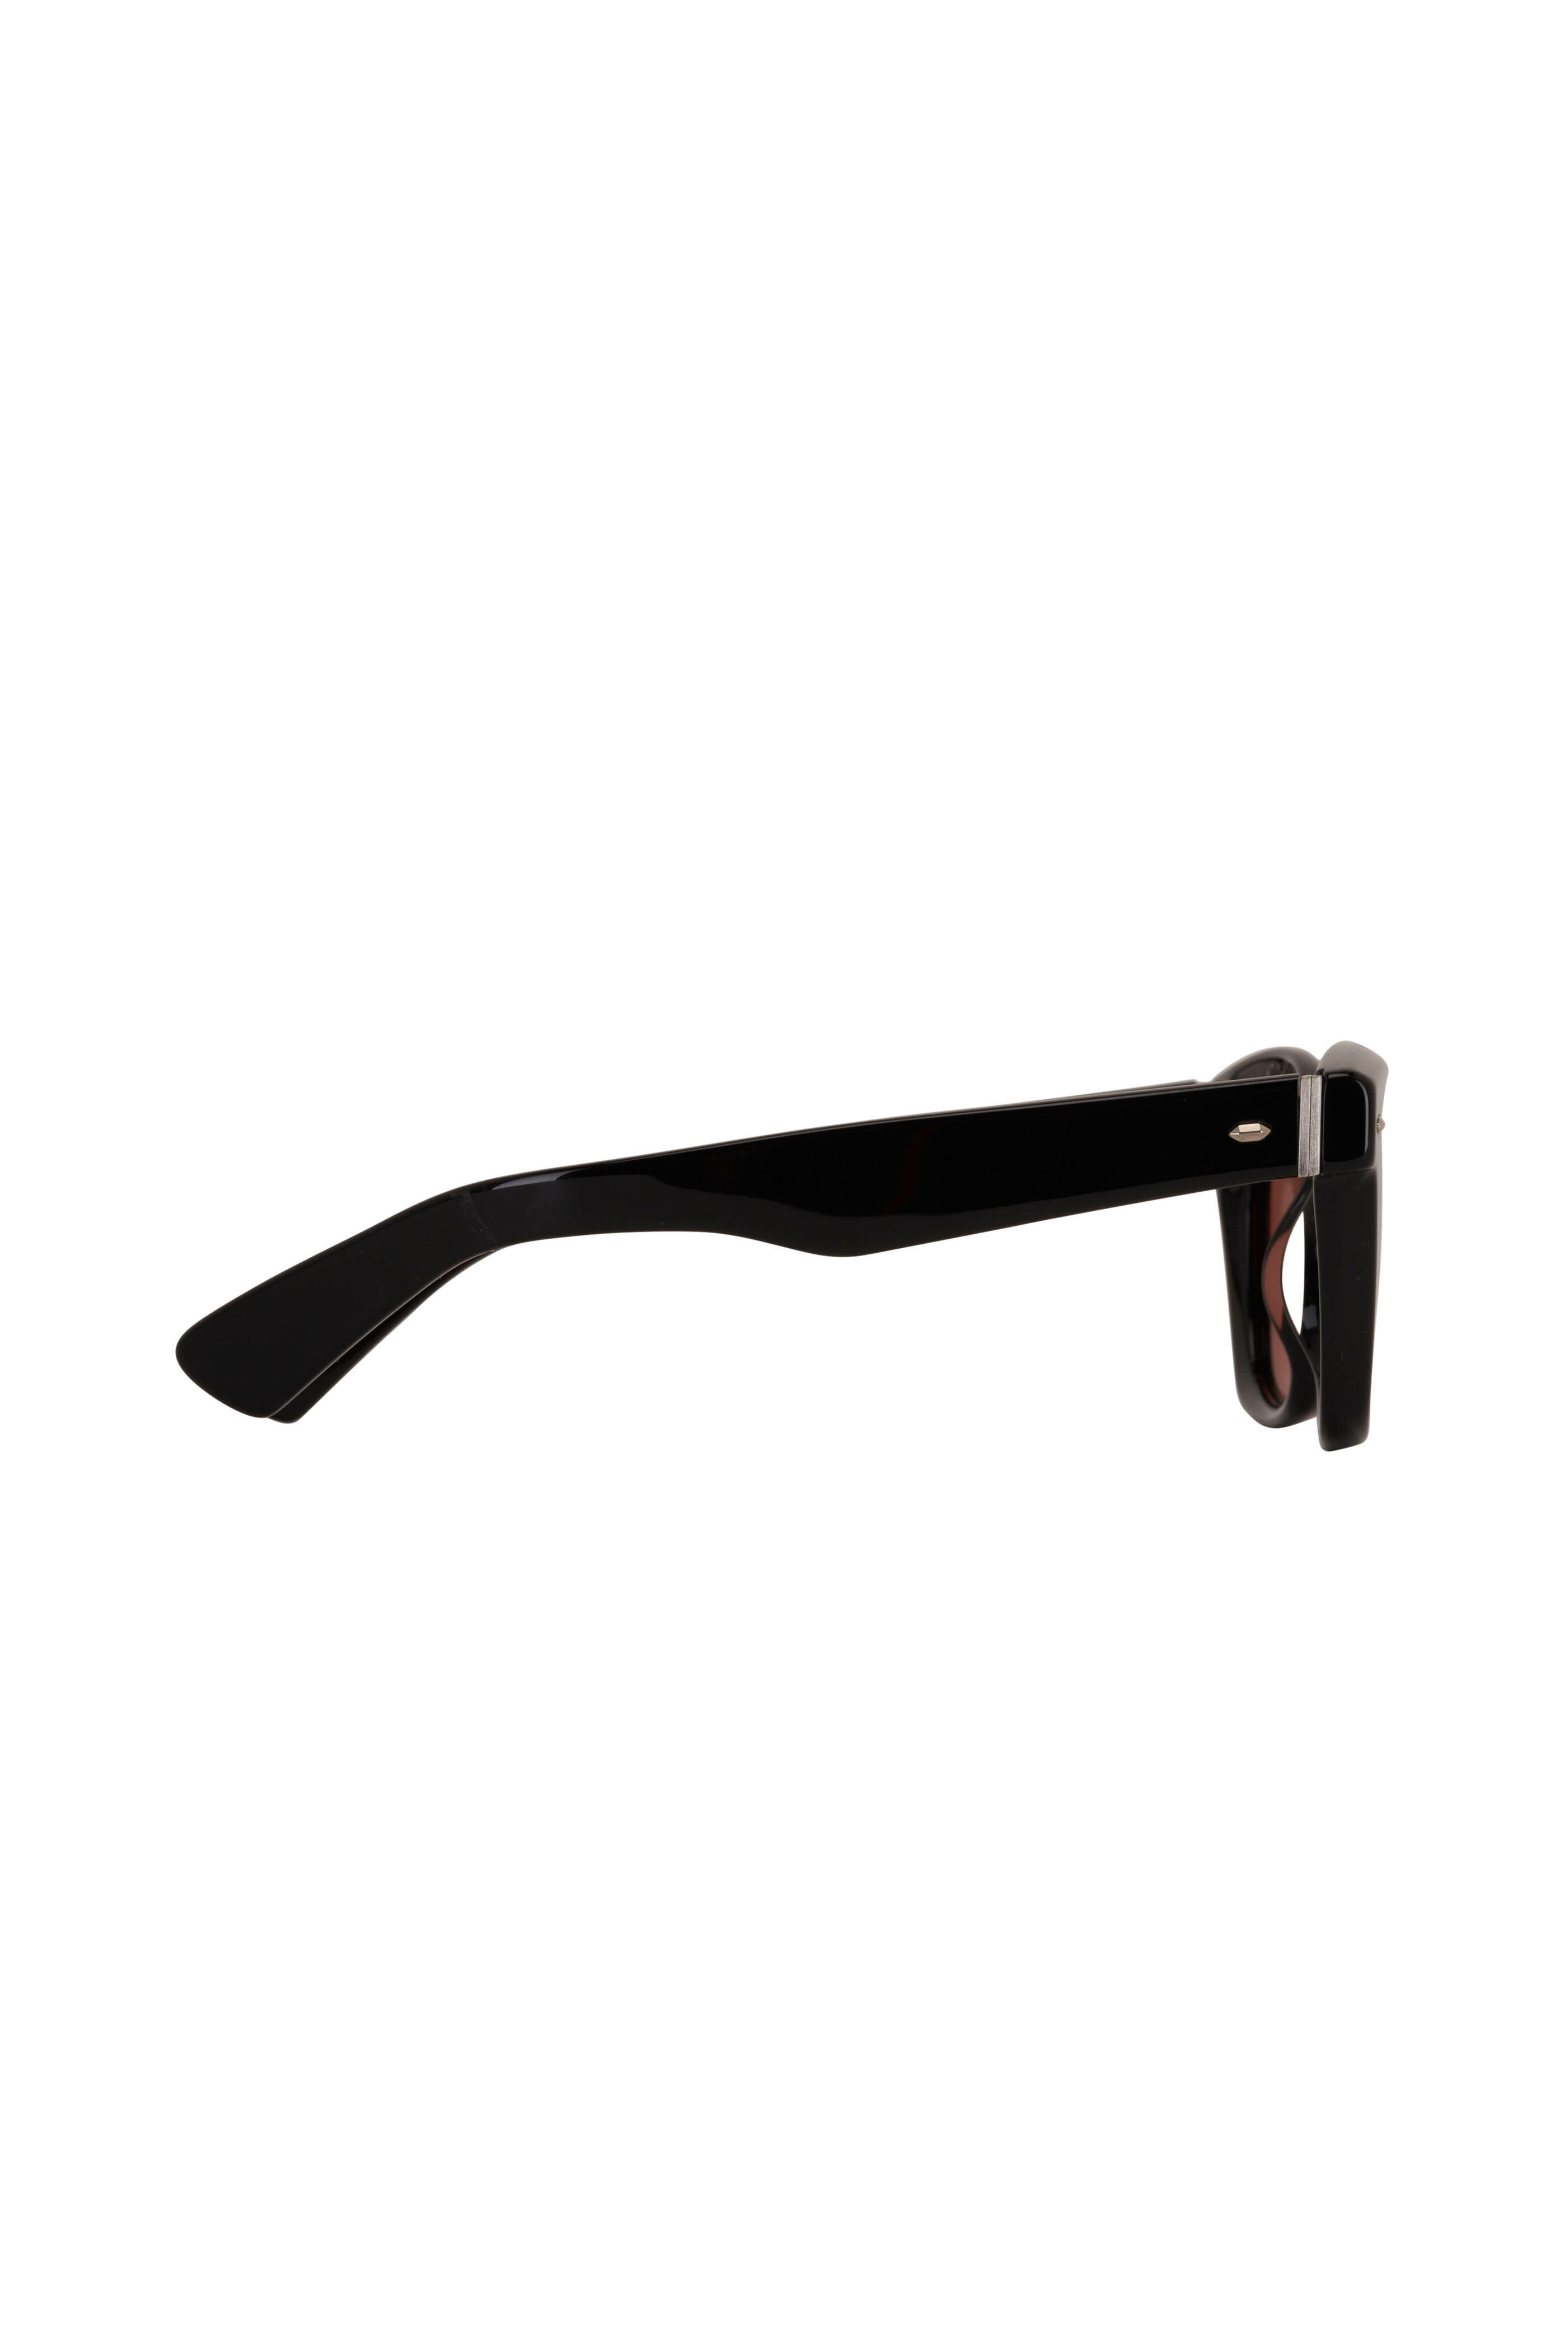 Oliver Peoples - Merceaux Black & Persimmon Sunglasses